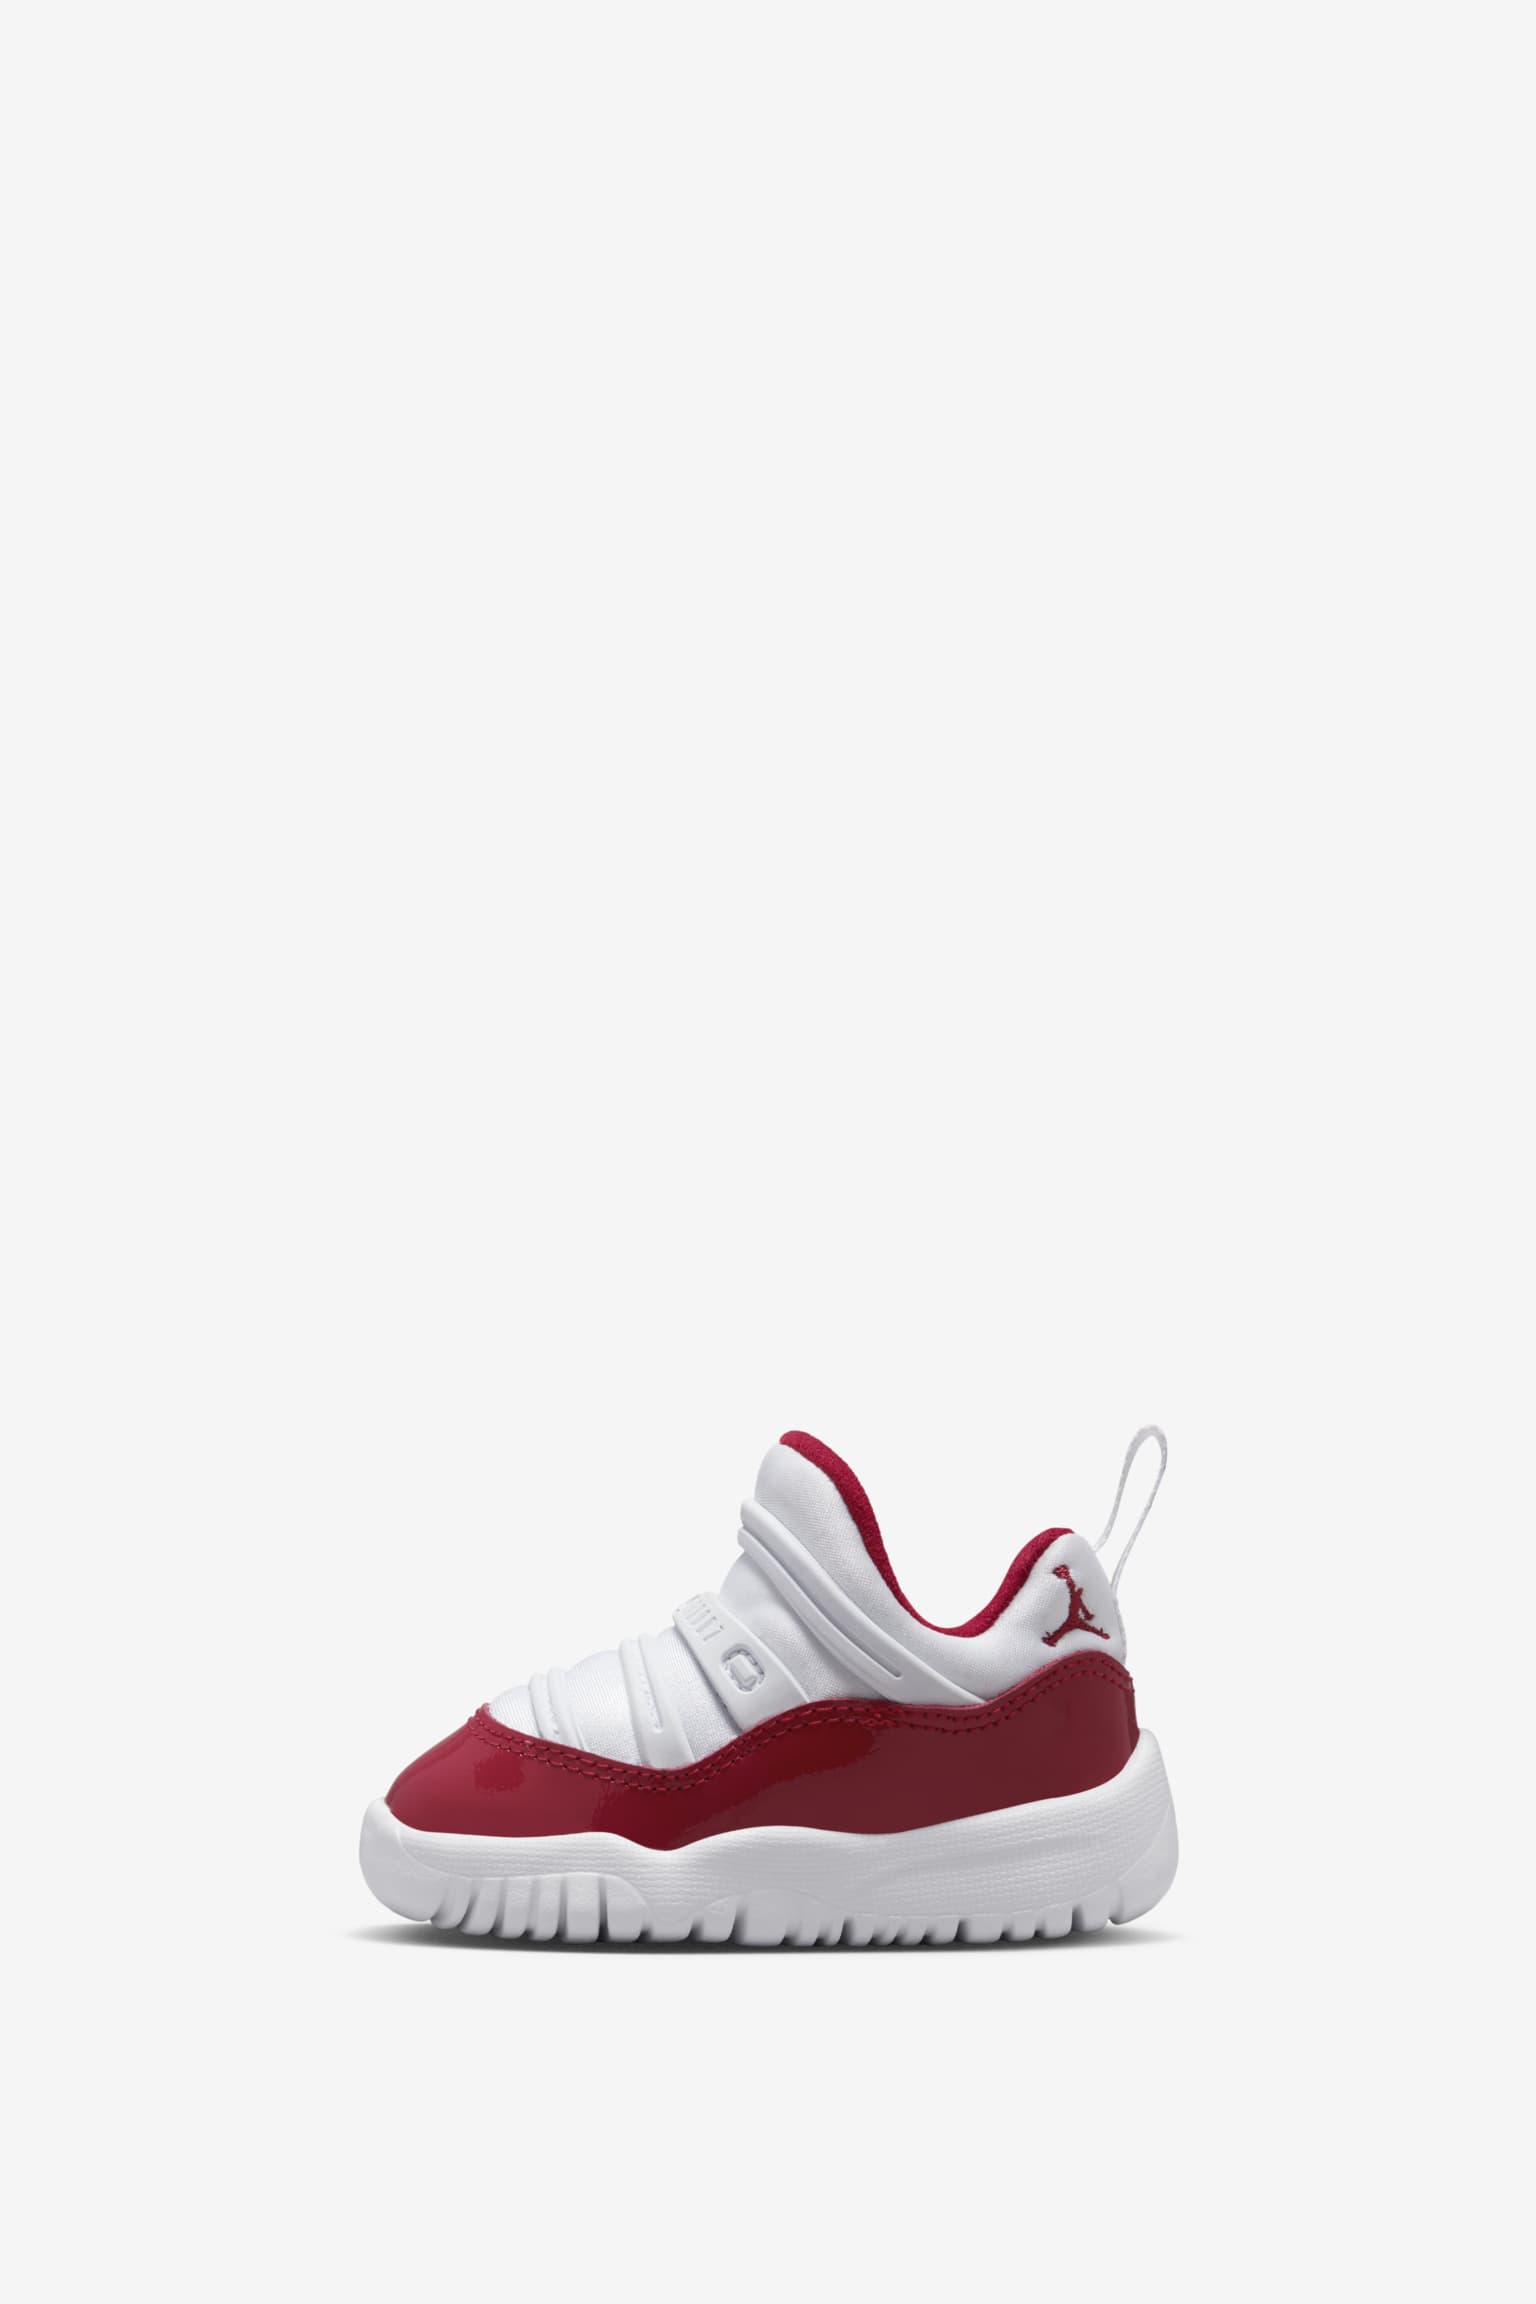 Air Jordan 11 'Varsity Red' (CT8012-116) Release Date. Nike SNKRS MY